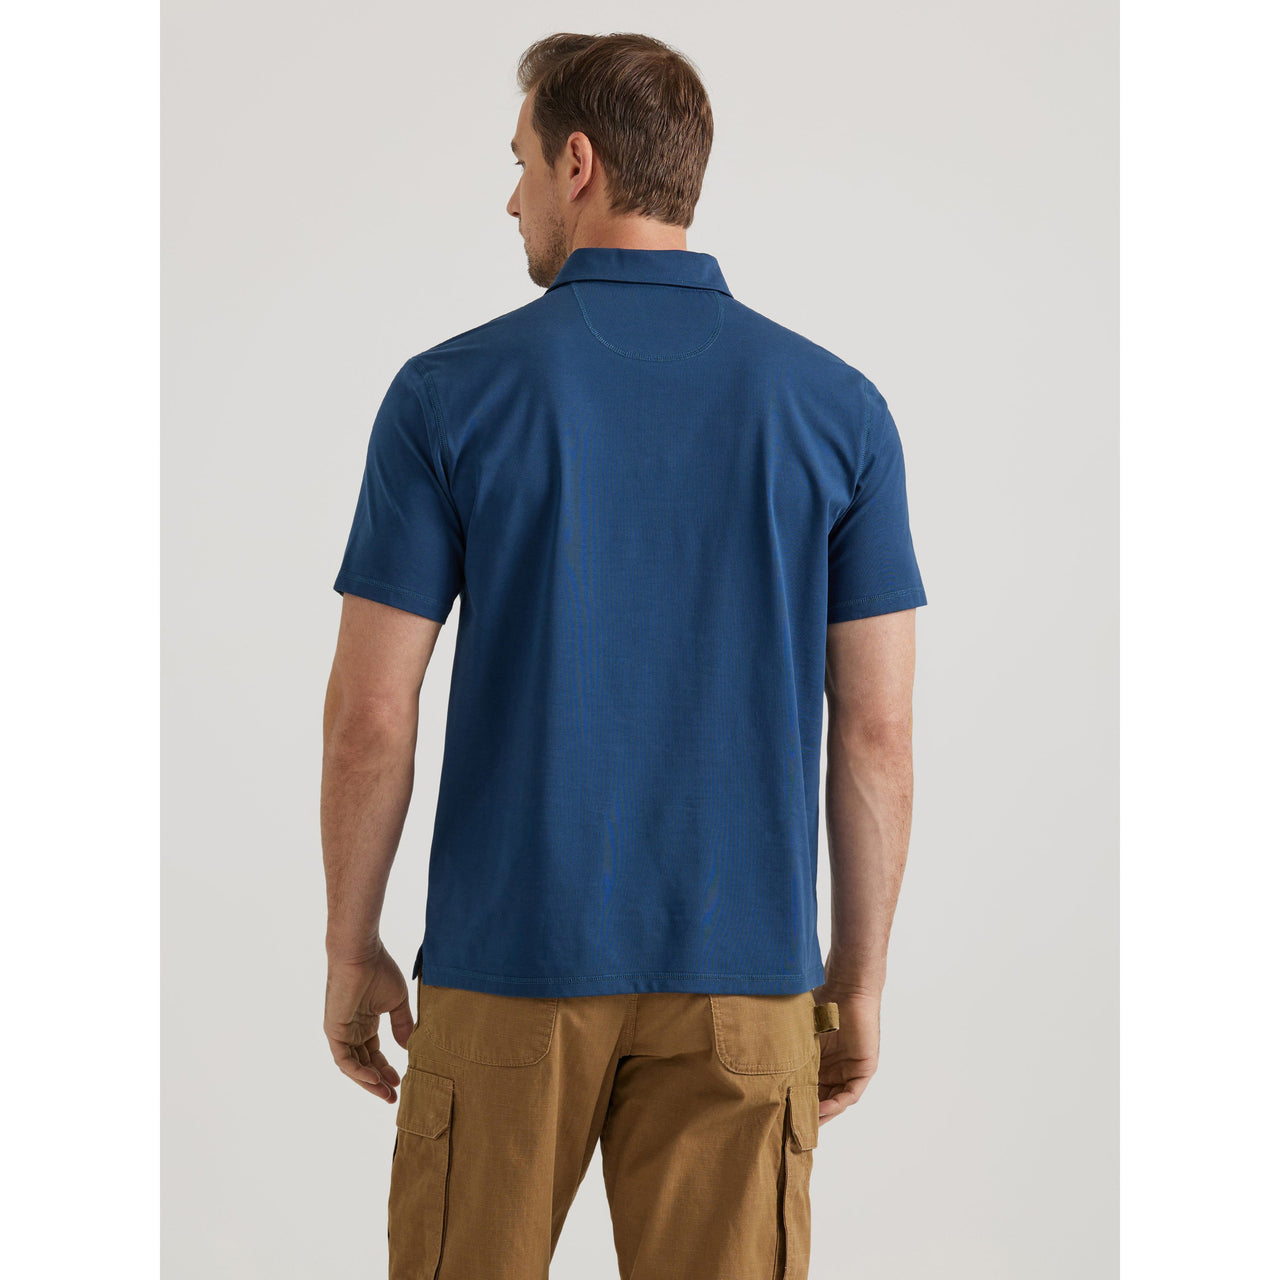 Wrangler Men's Riggs Performance Knit Short Sleeve Polo Shirt - Navy